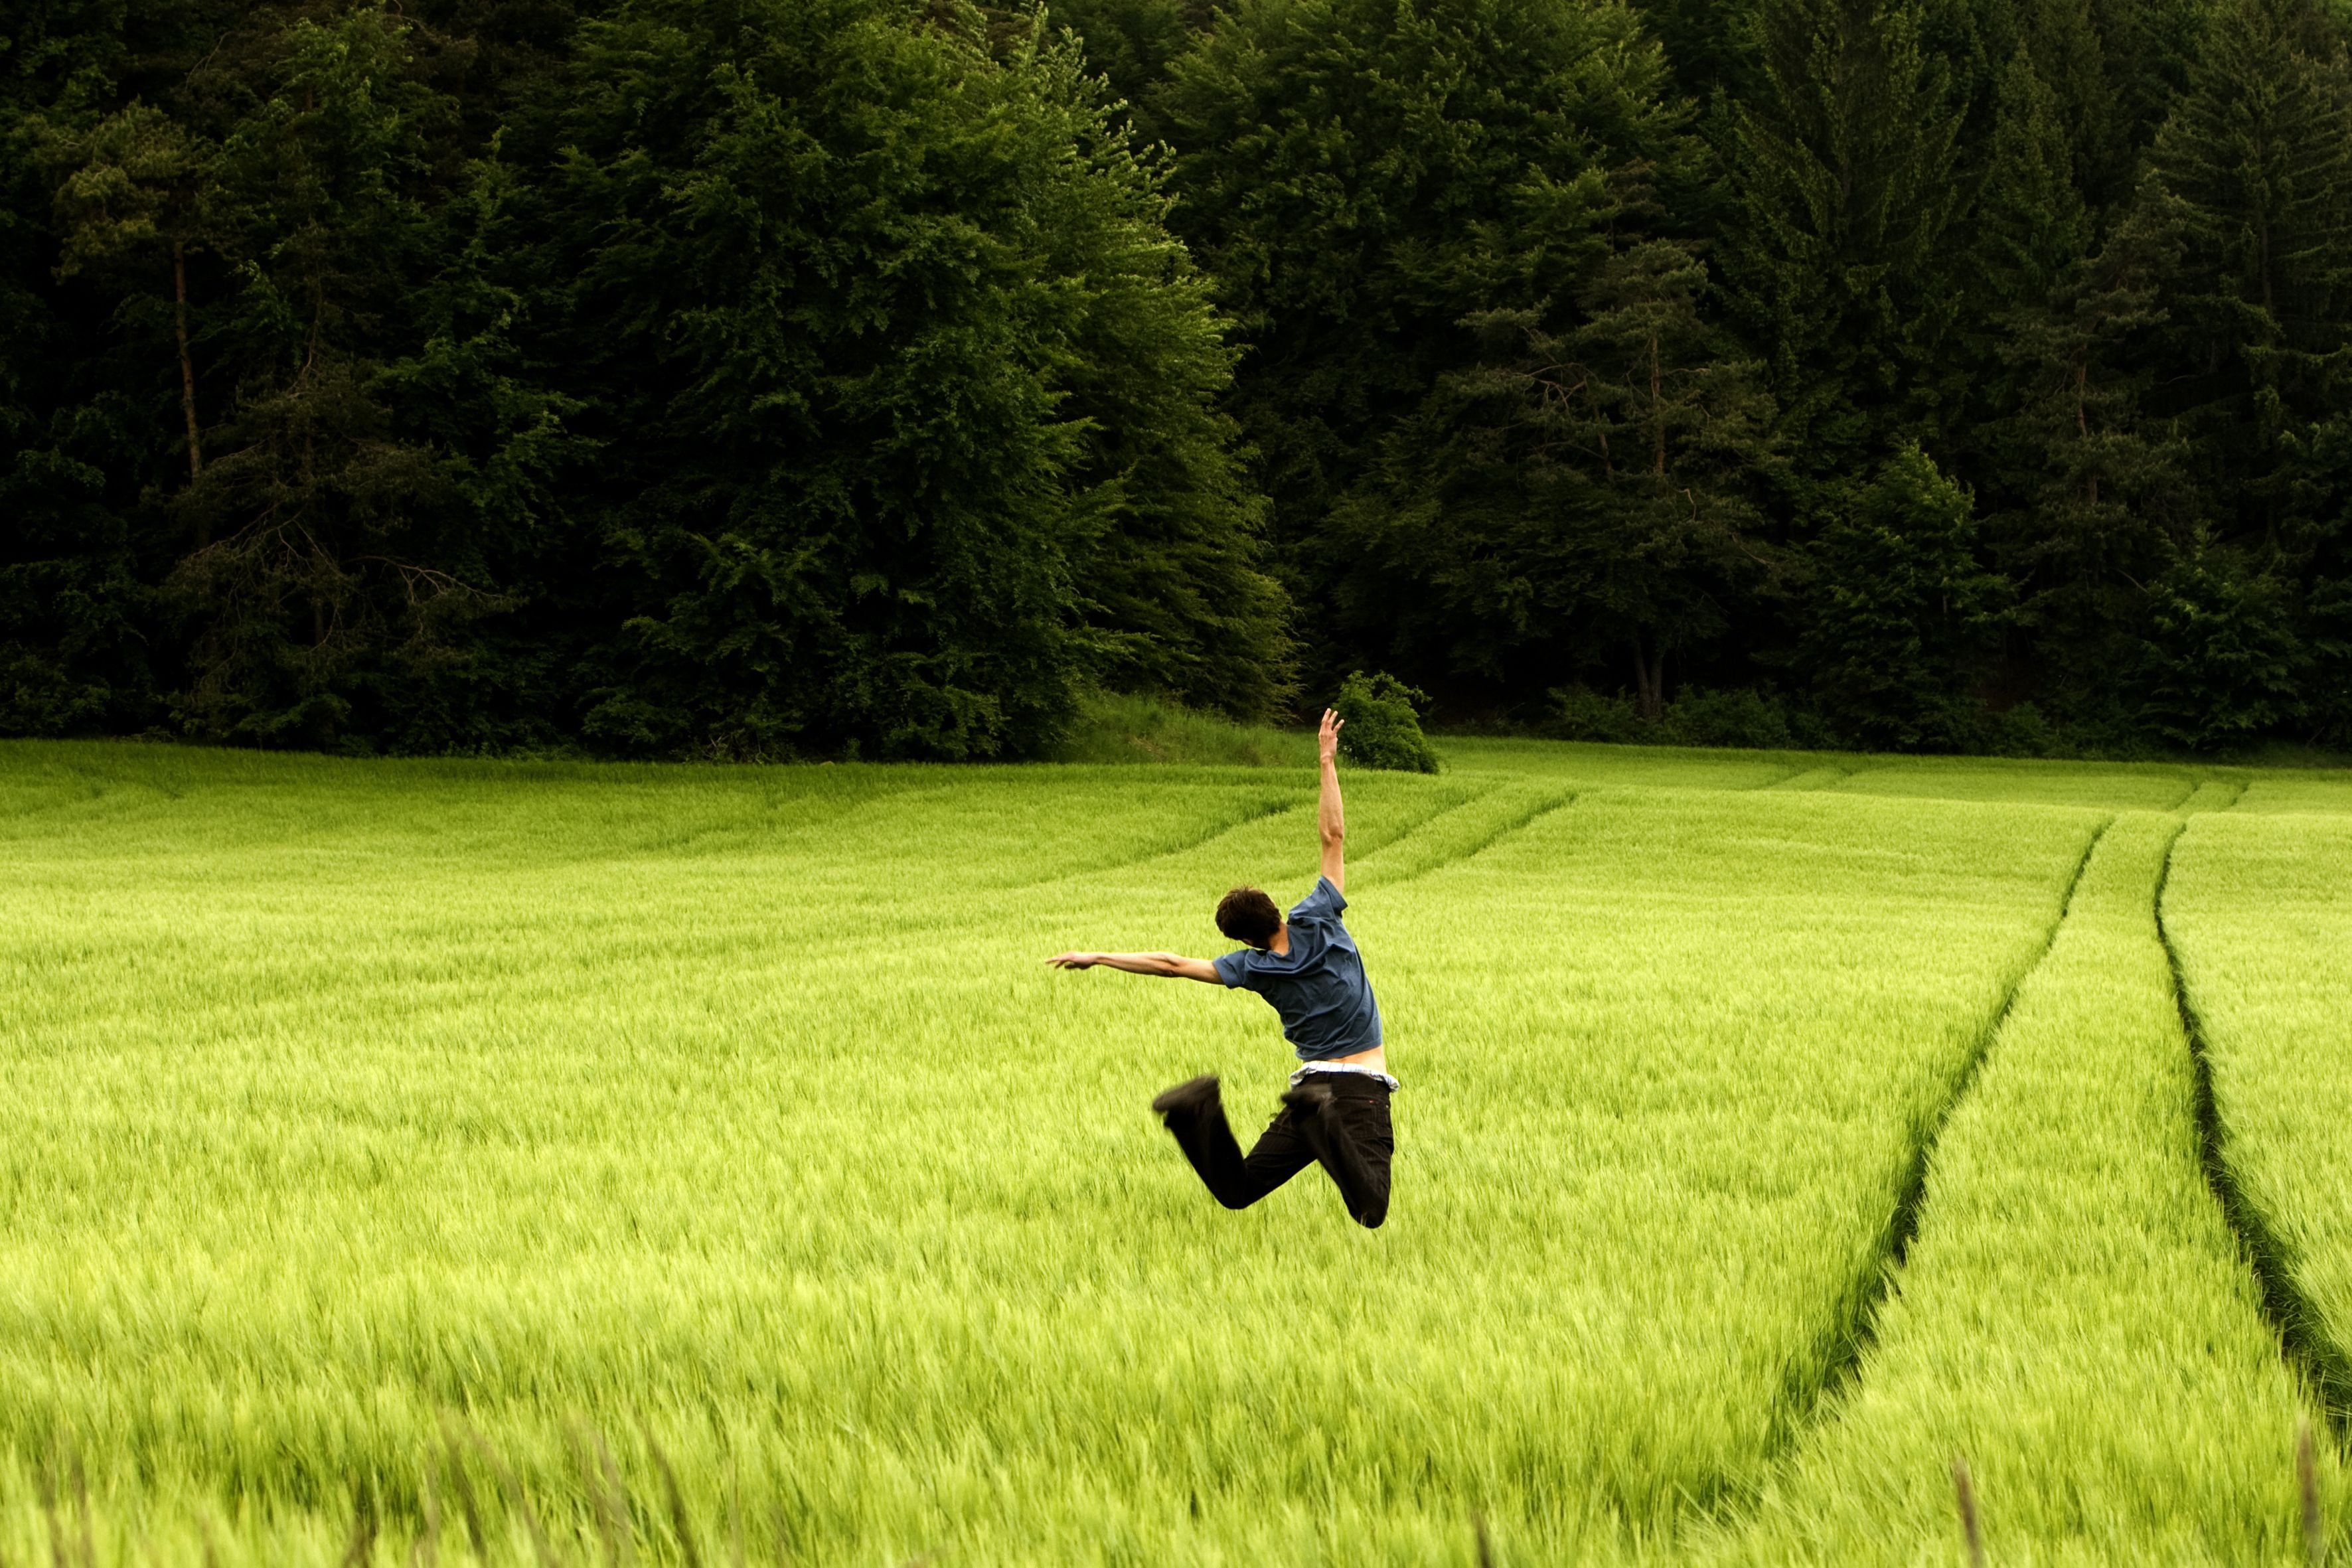 The knowing field. Человек и природа. Человек бежит по полю. Человек на траве. Счастливые люди на природе.